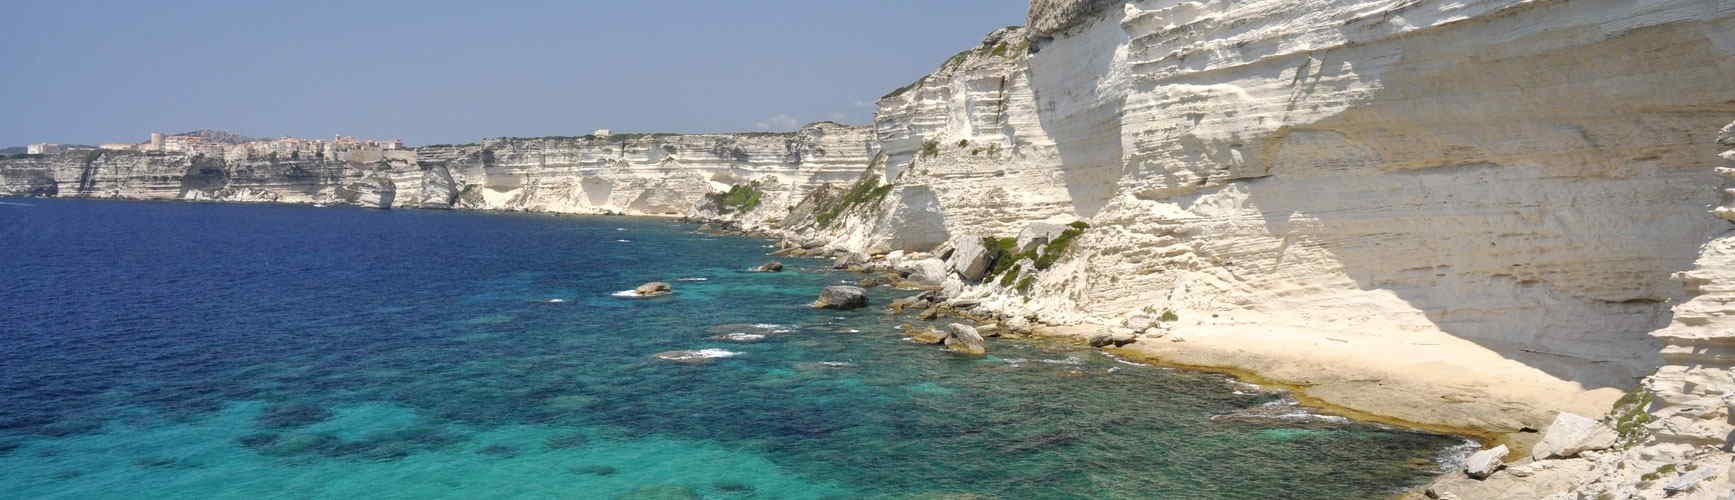 Bonifacio Corsica: panoramic view